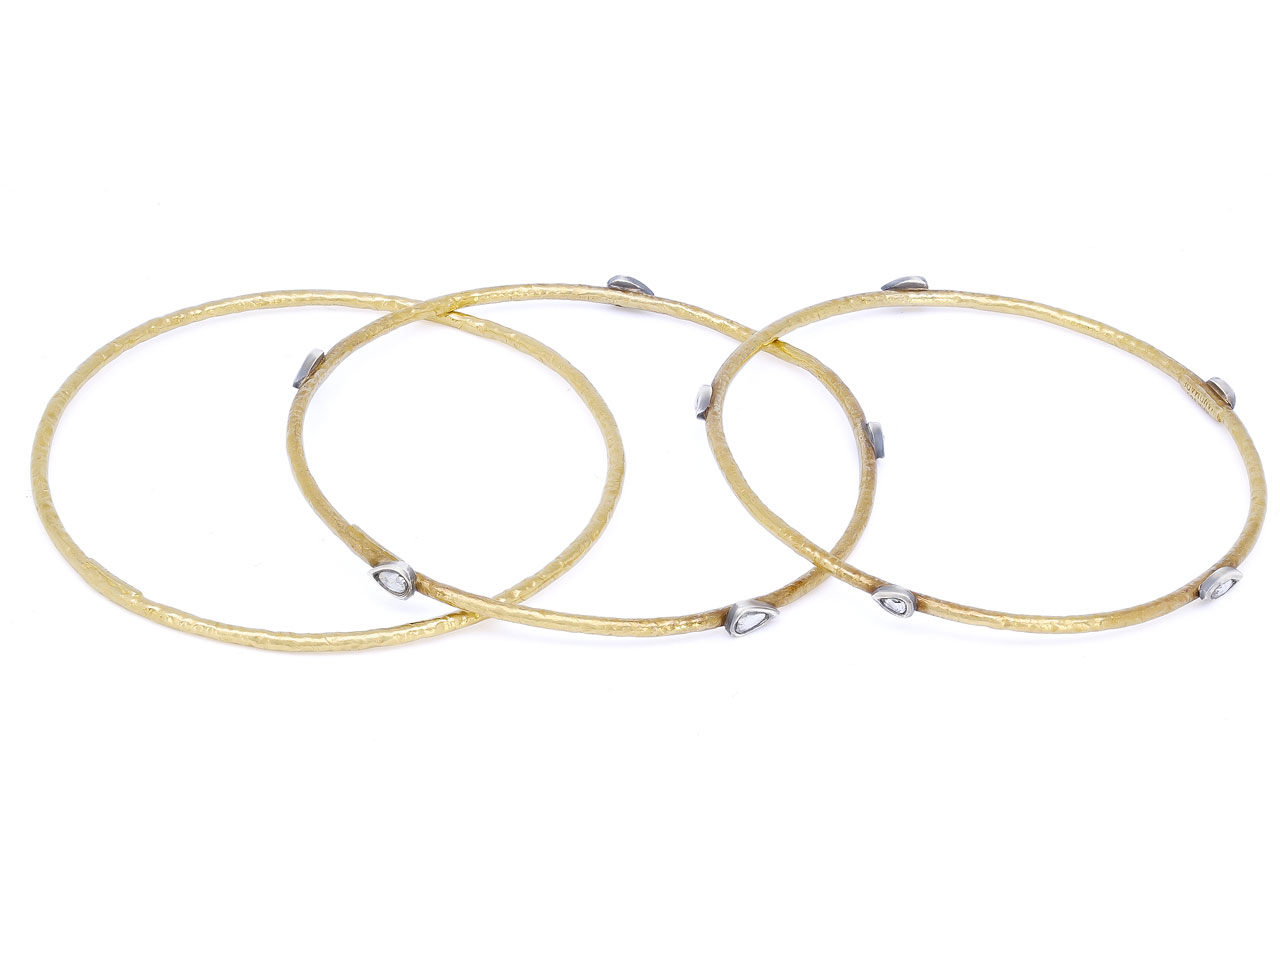 Trio of Ara Bangle Bracelets in High Karat Gold and Silver